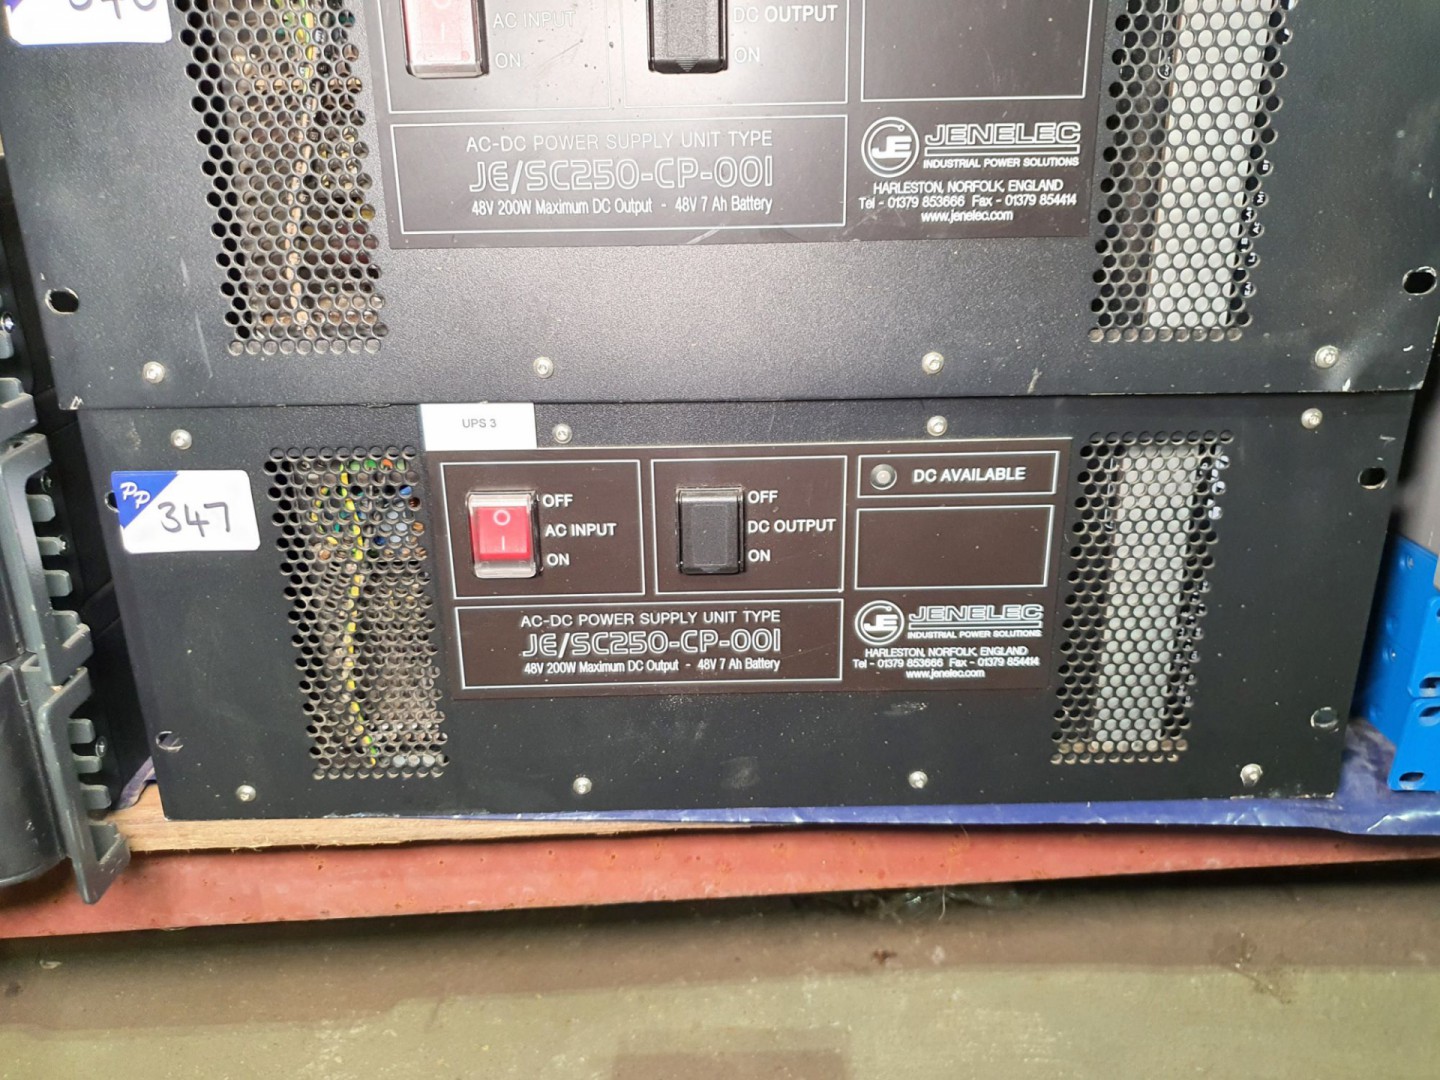 Jenelec JE/SC250-CP-001 power supply unit